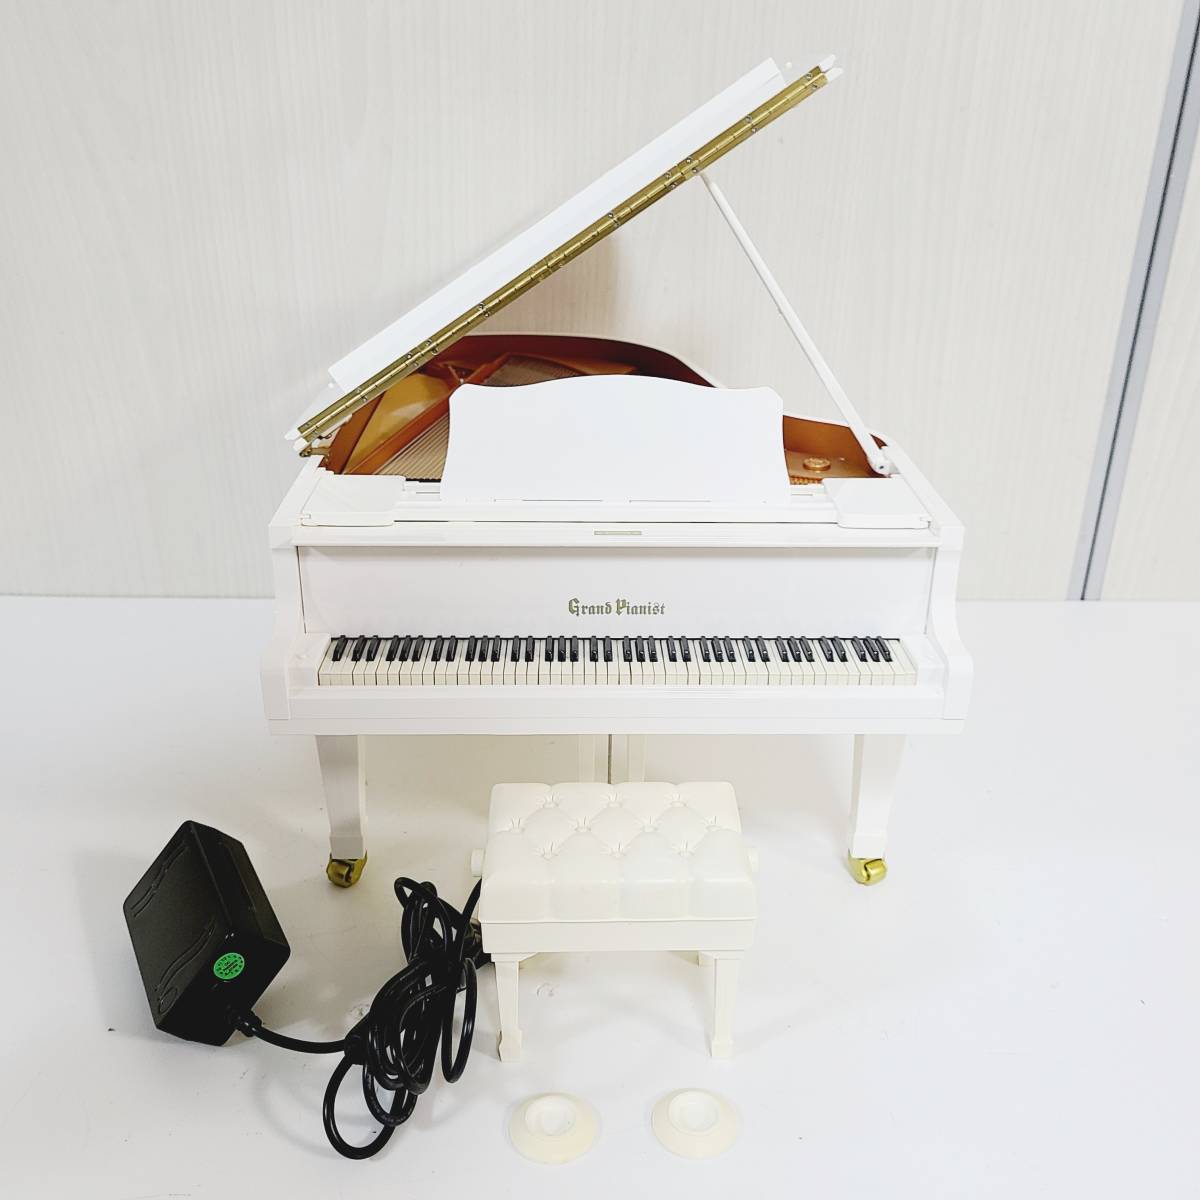 【FLA5923】　SEGA TOYS セガトイズ/ Grand Pianist グランドピアニスト/ ミニピアノ グランドピアノ 自動演奏 玩具 稼働品_画像1